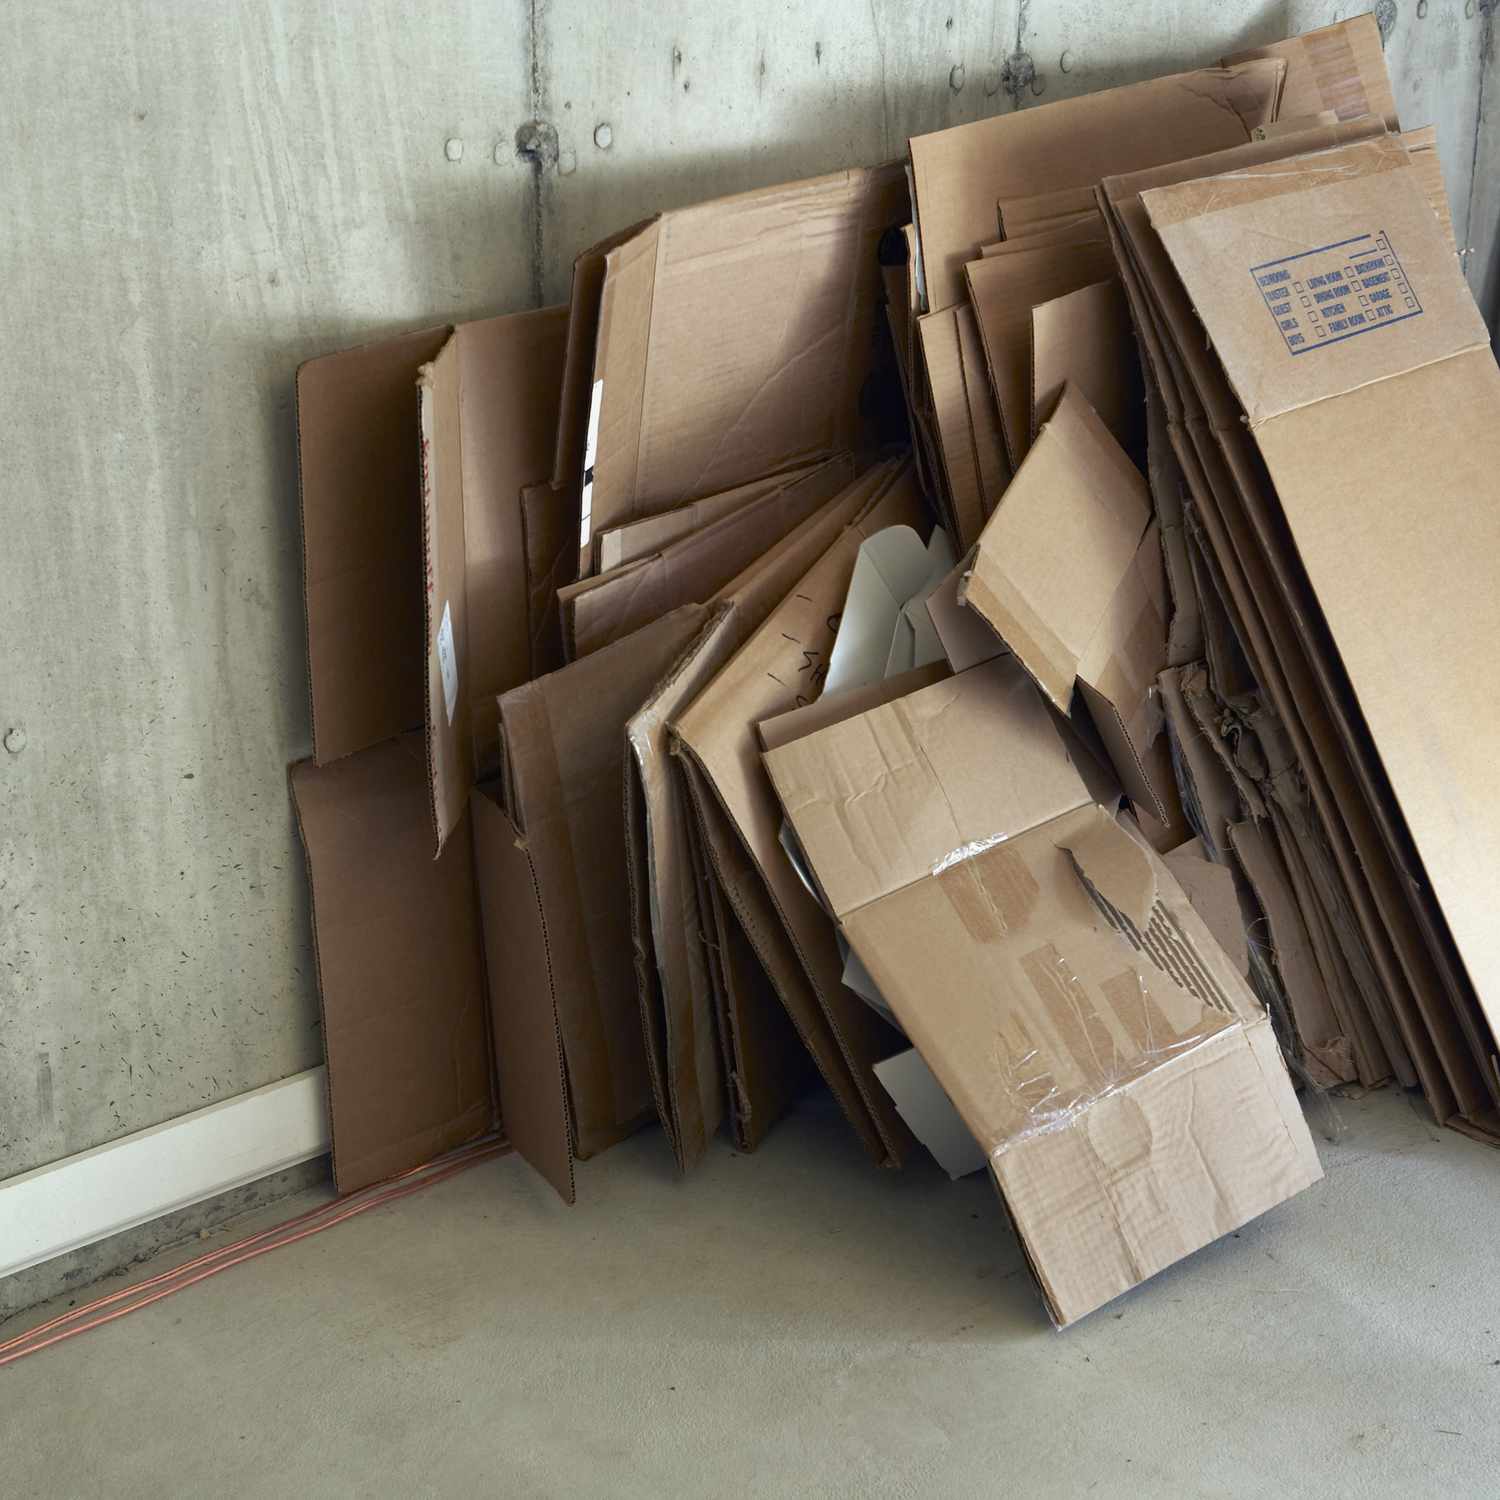 Broken Down Cardboard Boxes